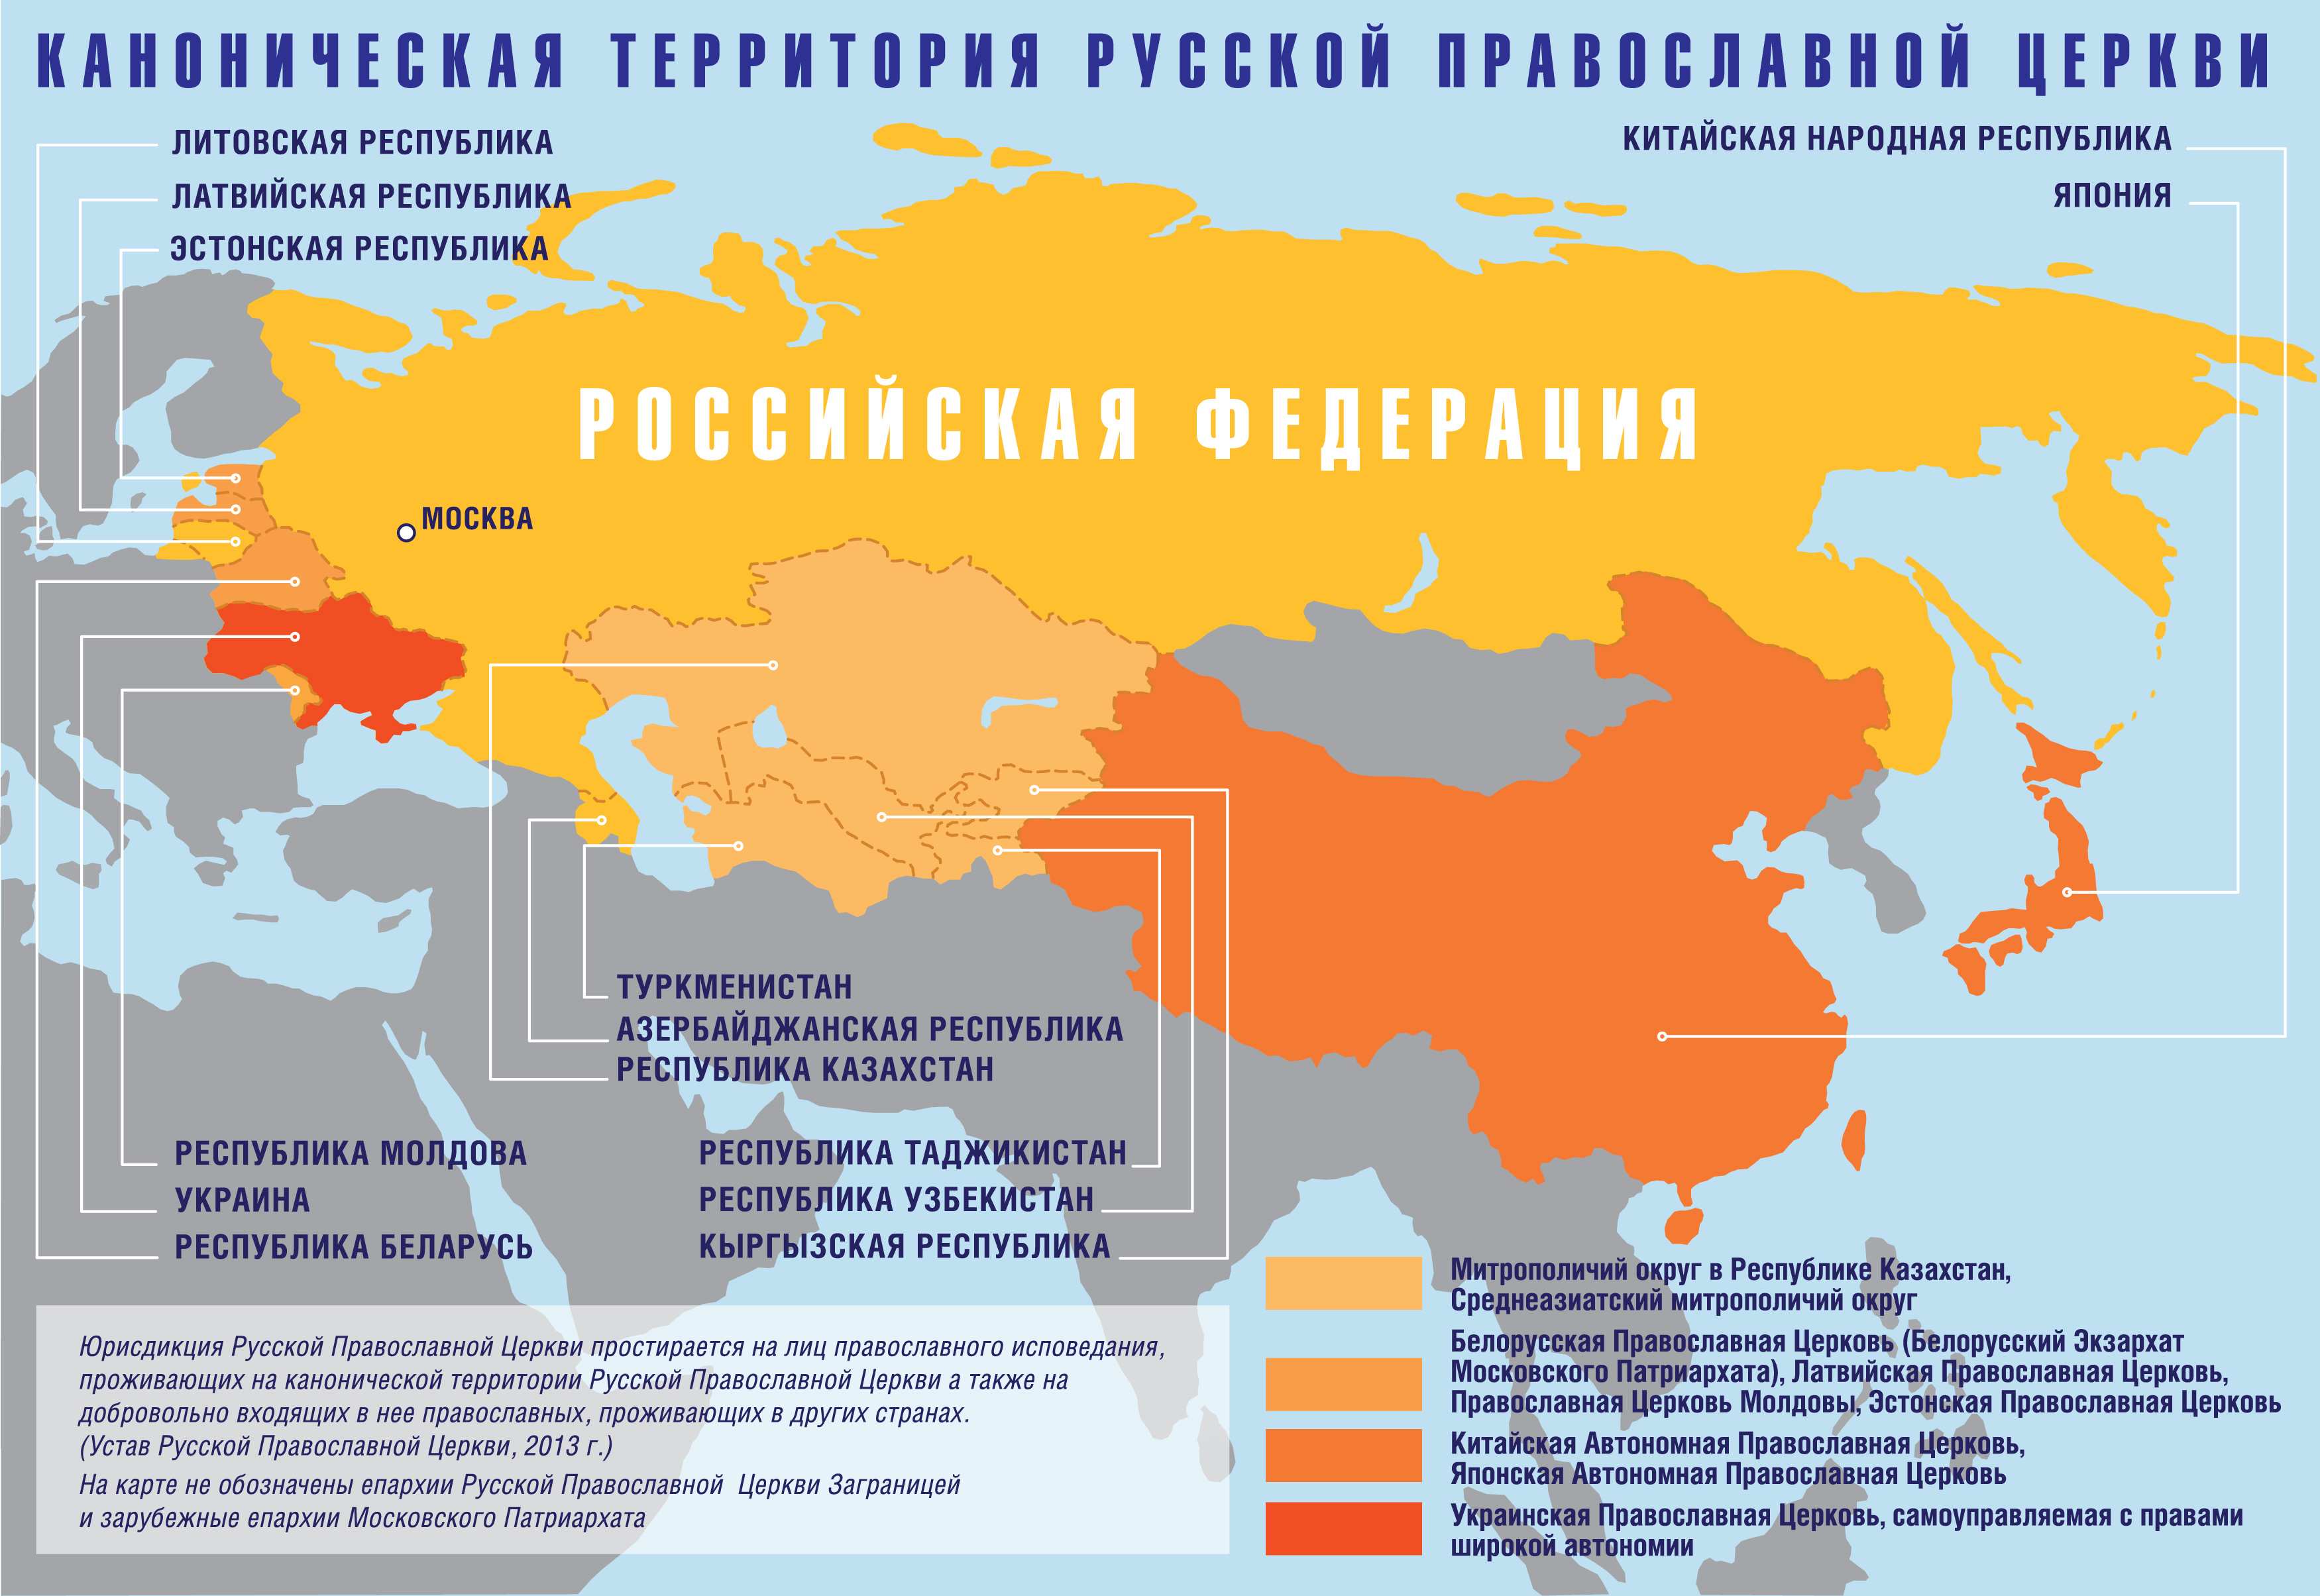 kanonicheskaya-territoriya-russkoj-cerkvi-karta.jpg